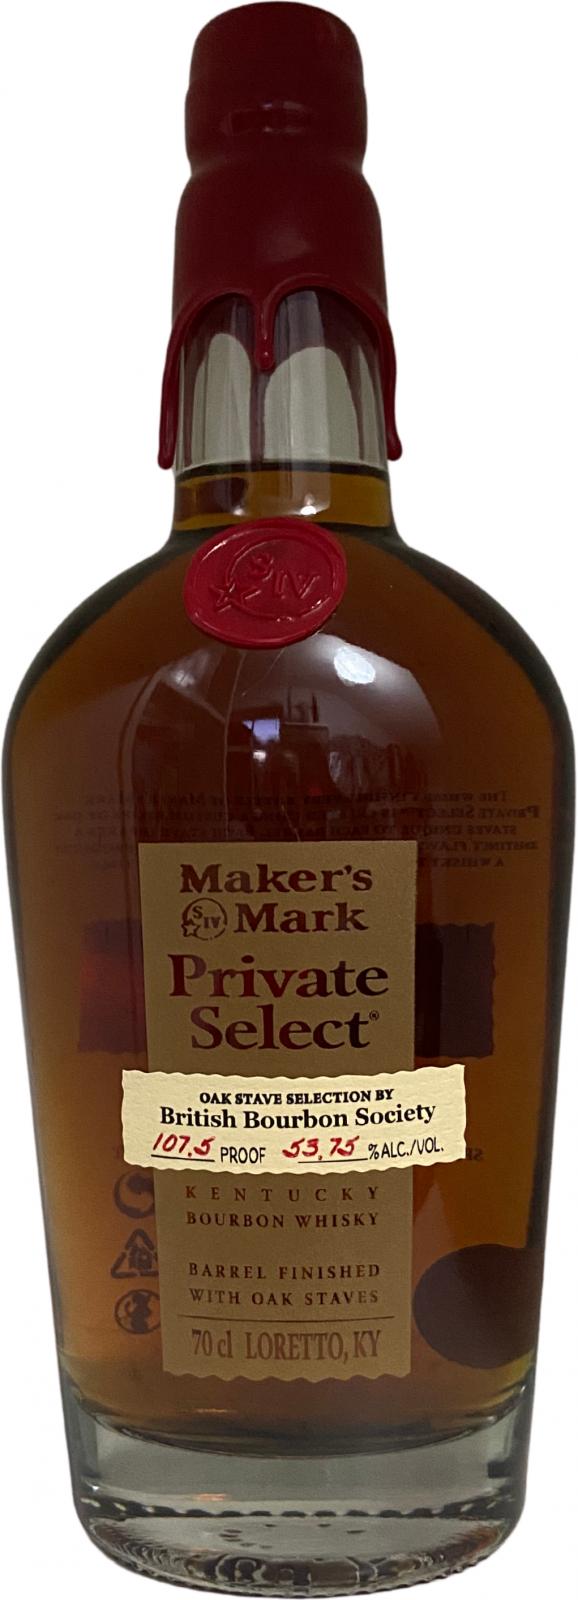 Maker's Mark Private Select British Bourbon Society 53.75% 700ml